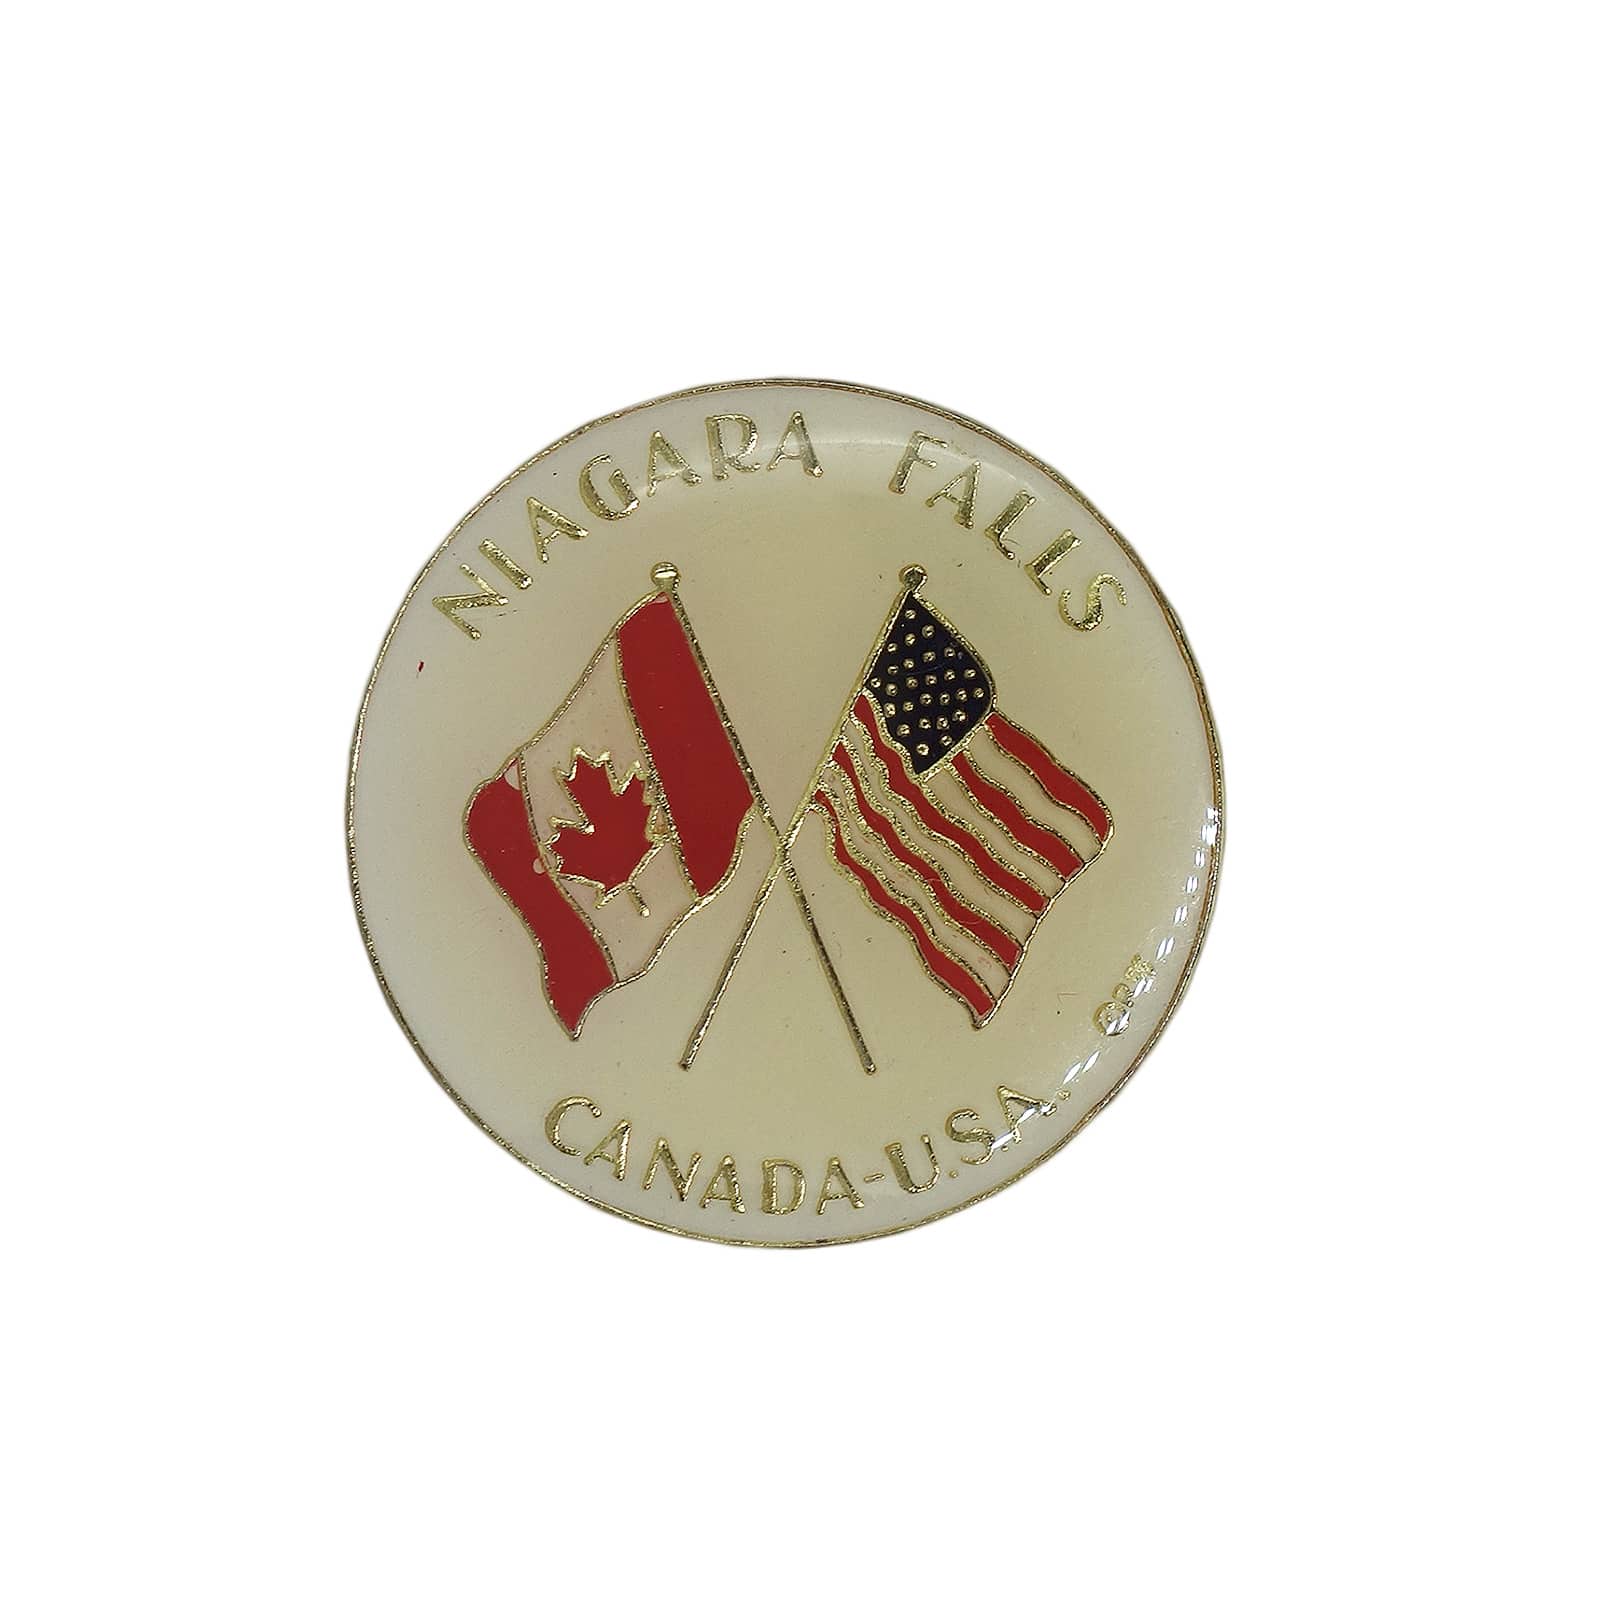 NIAGARA FALLS ピンズ カナダ国旗 × 星条旗 留め具付き